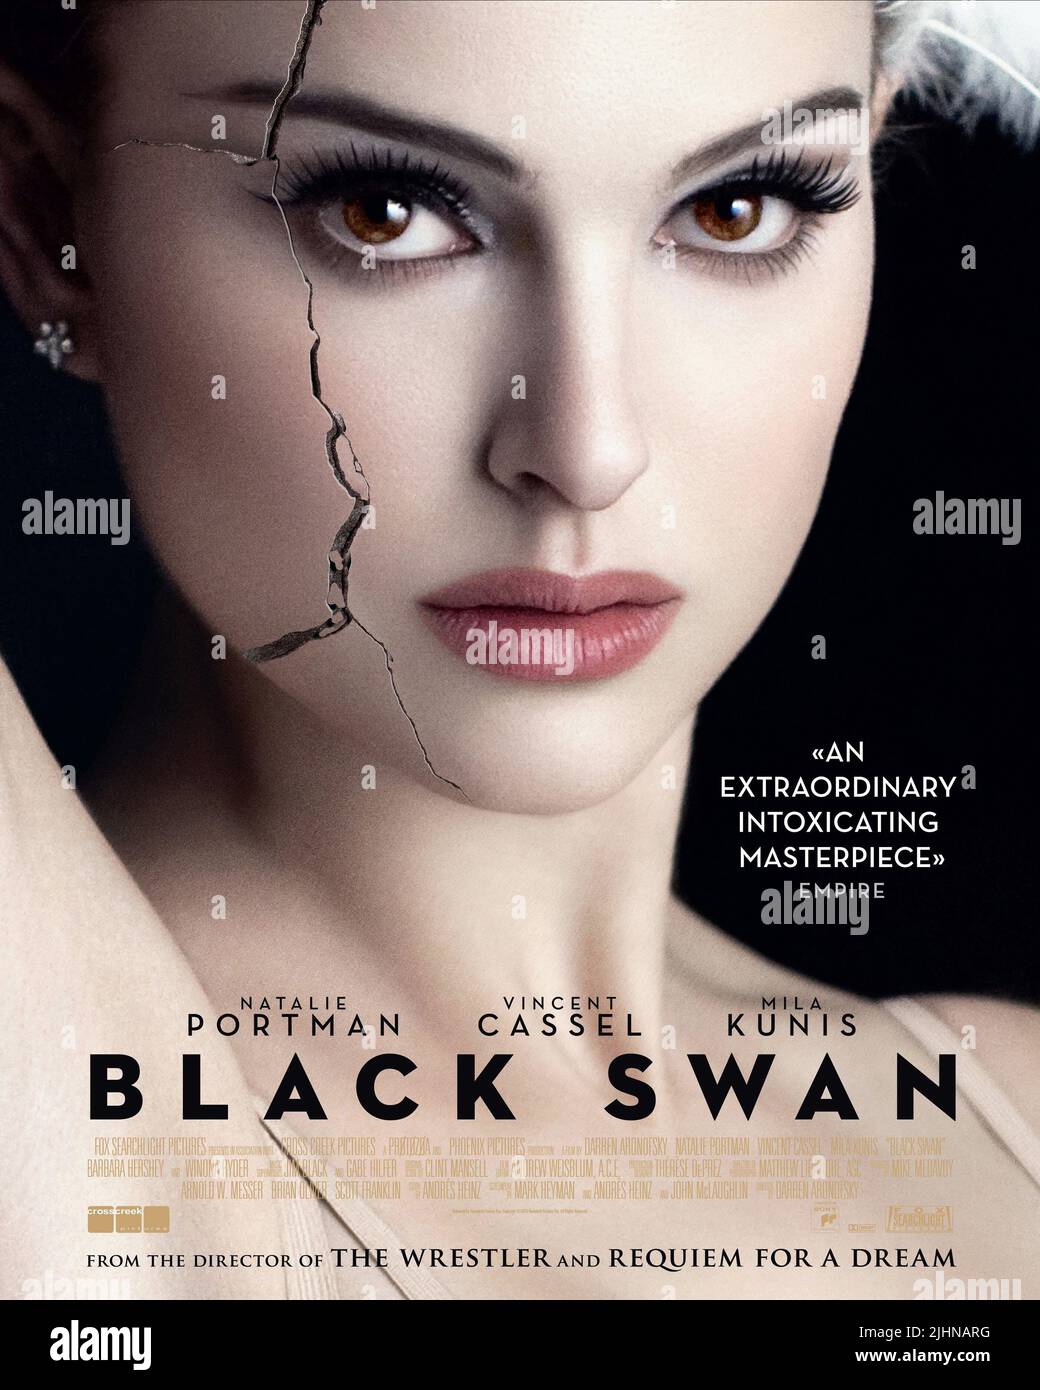 Black swan film natalie portman hi-res stock photography and images - Alamy